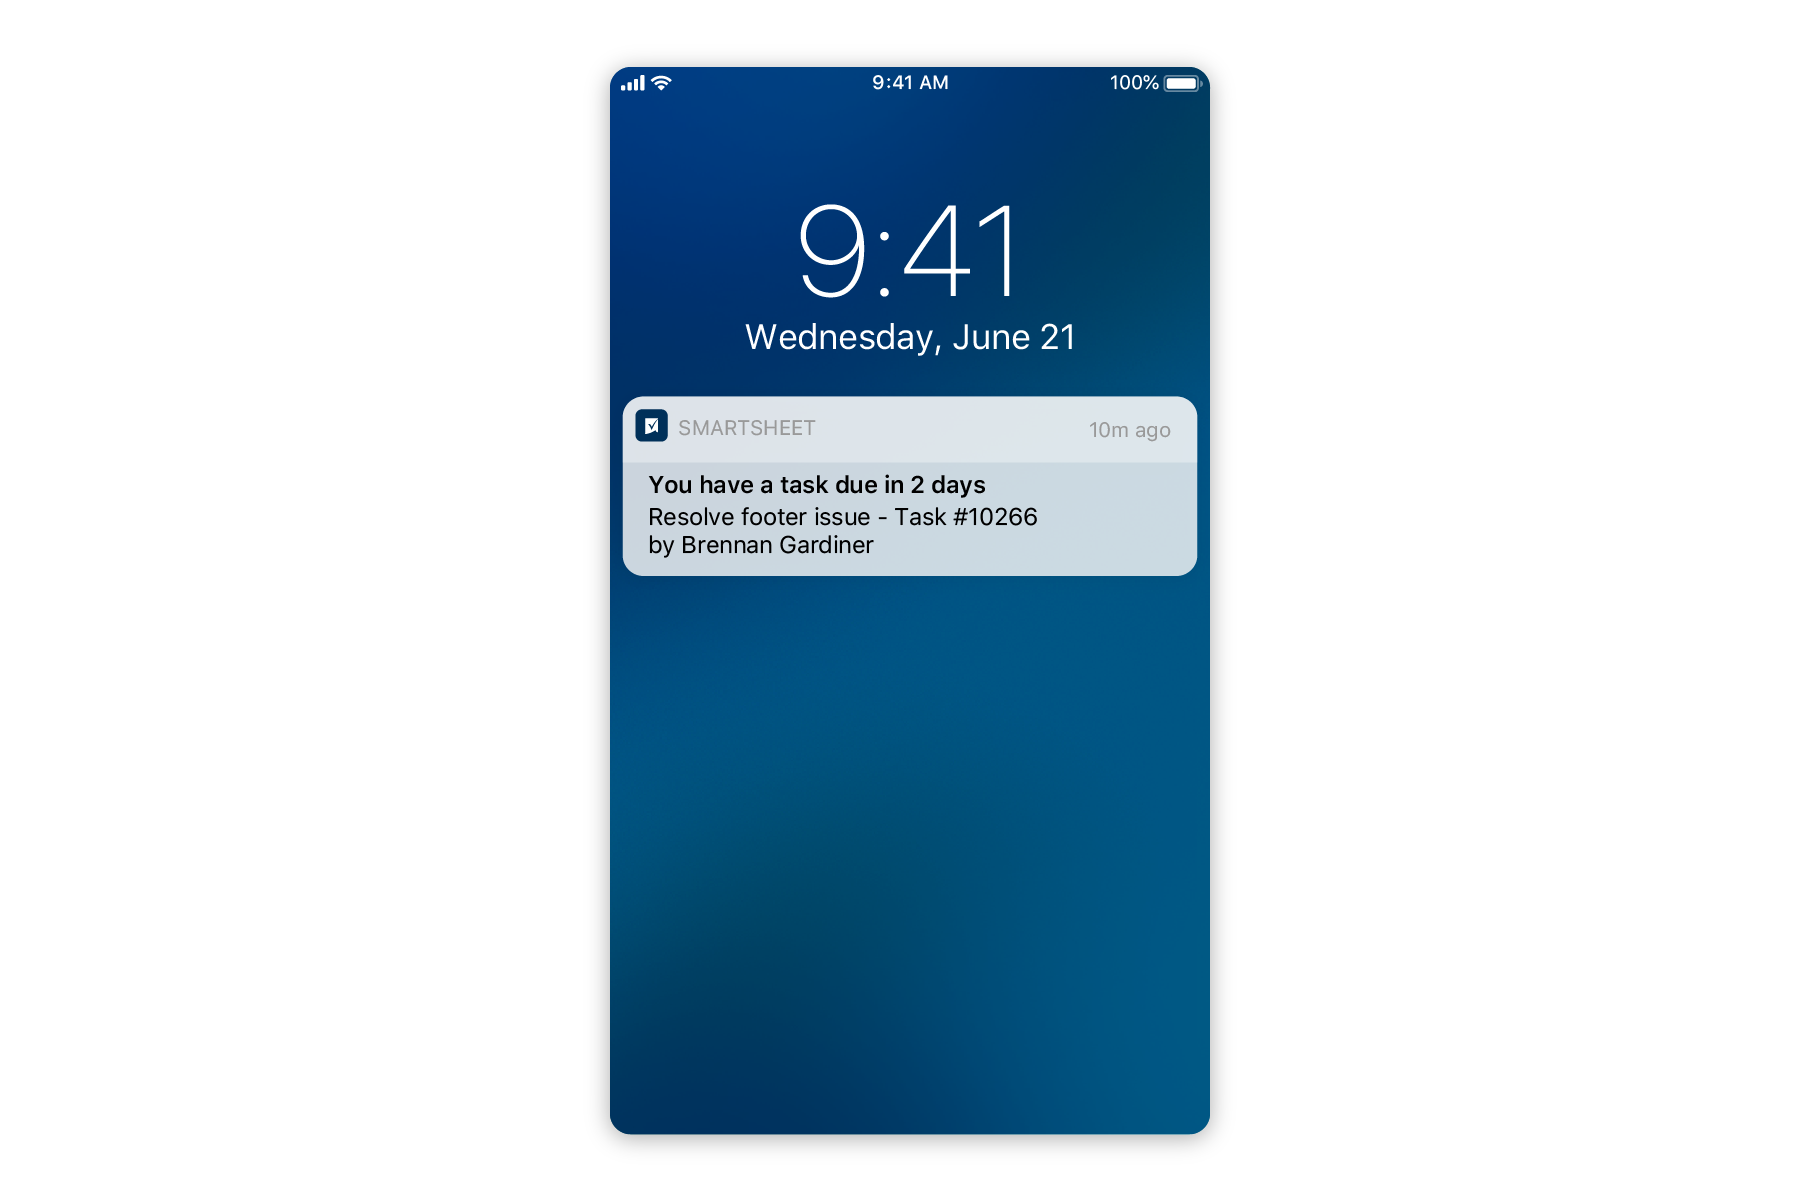 Smartsheet Mobile push notifications